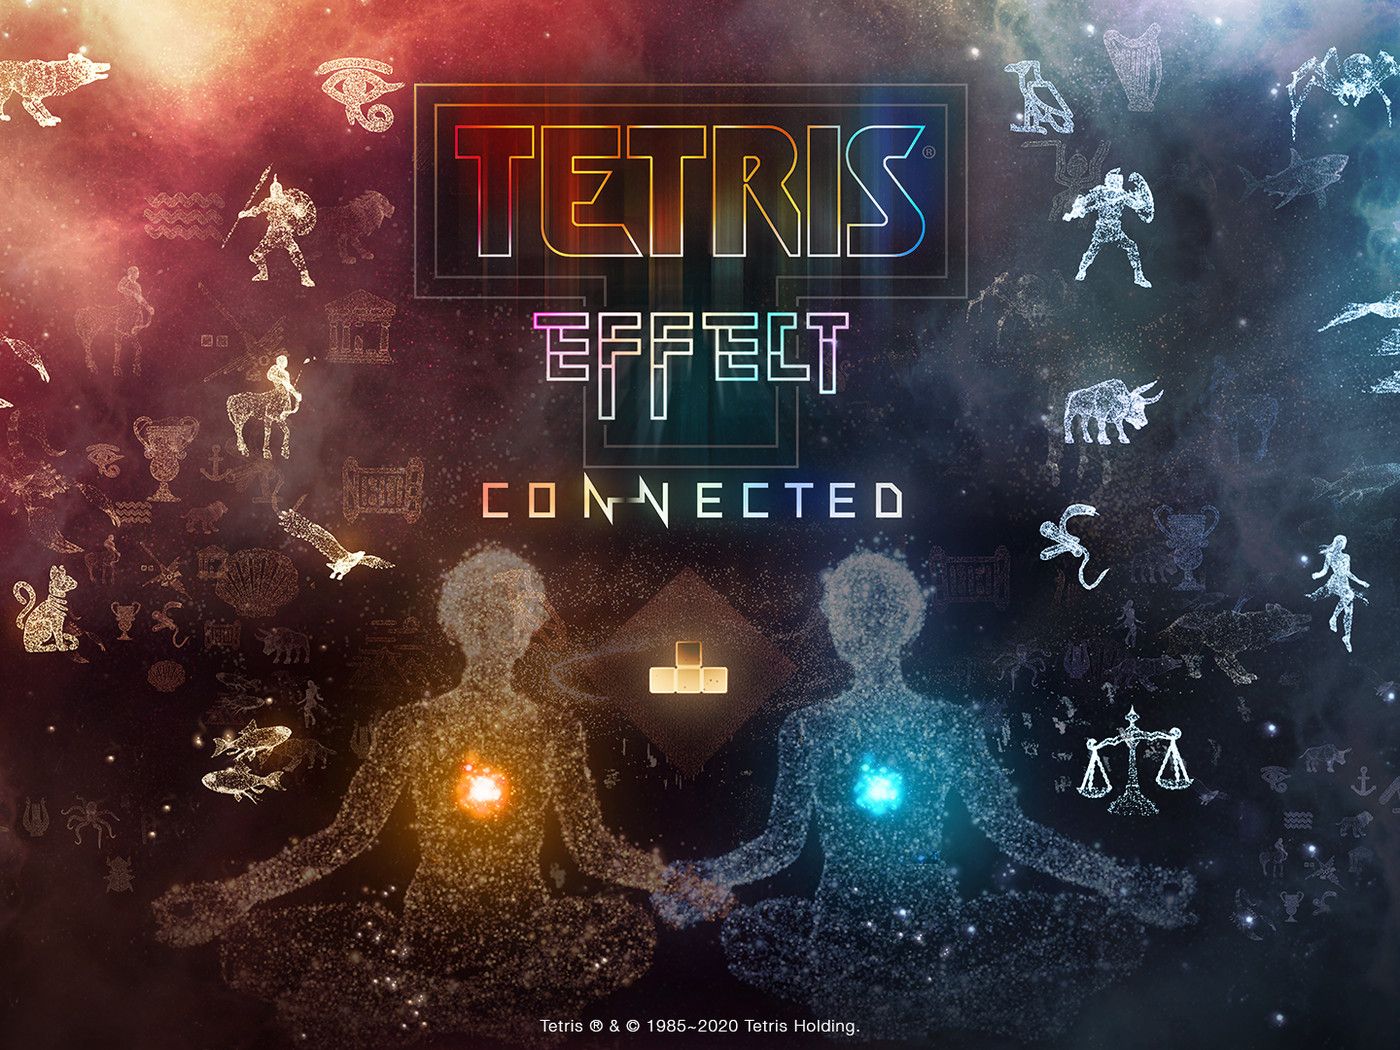 Tetris EC Xbox series x